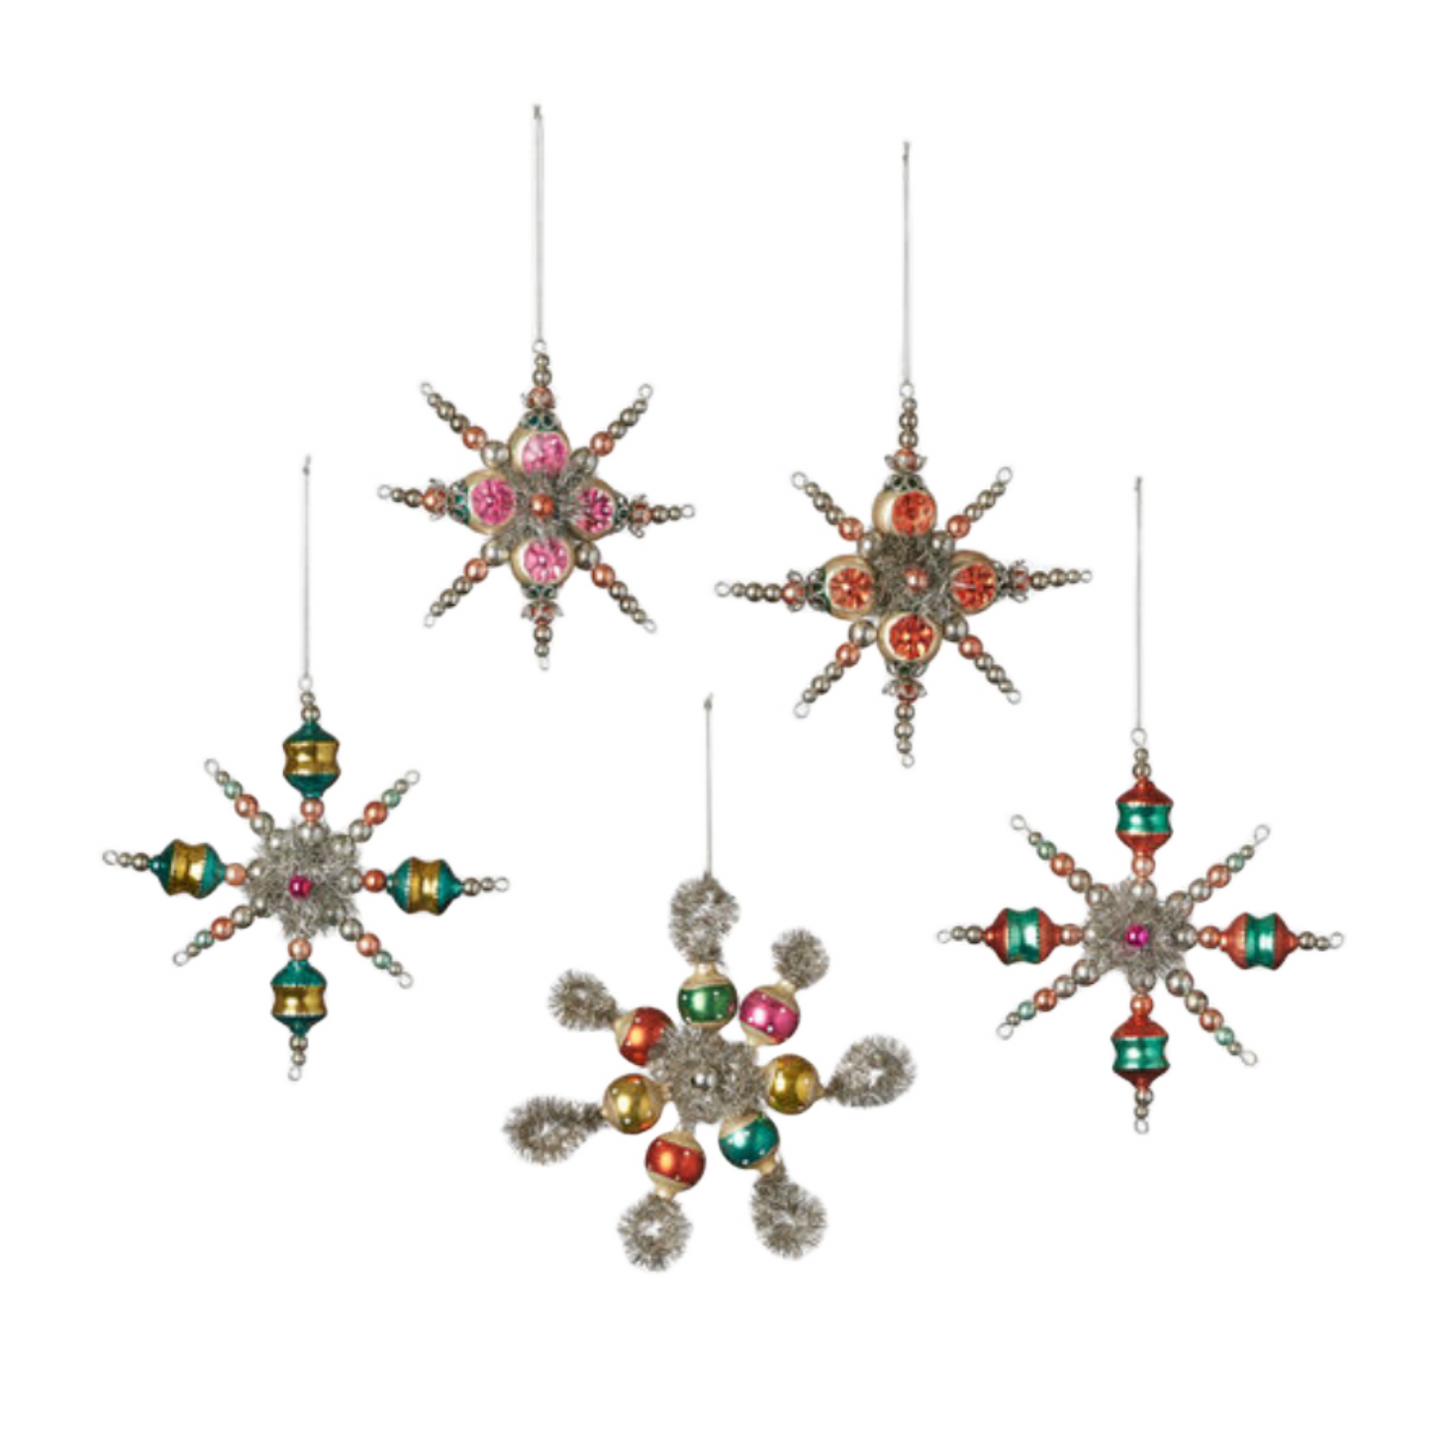 Tinsel Starburst Ornament by One Hundred 80 Degrees